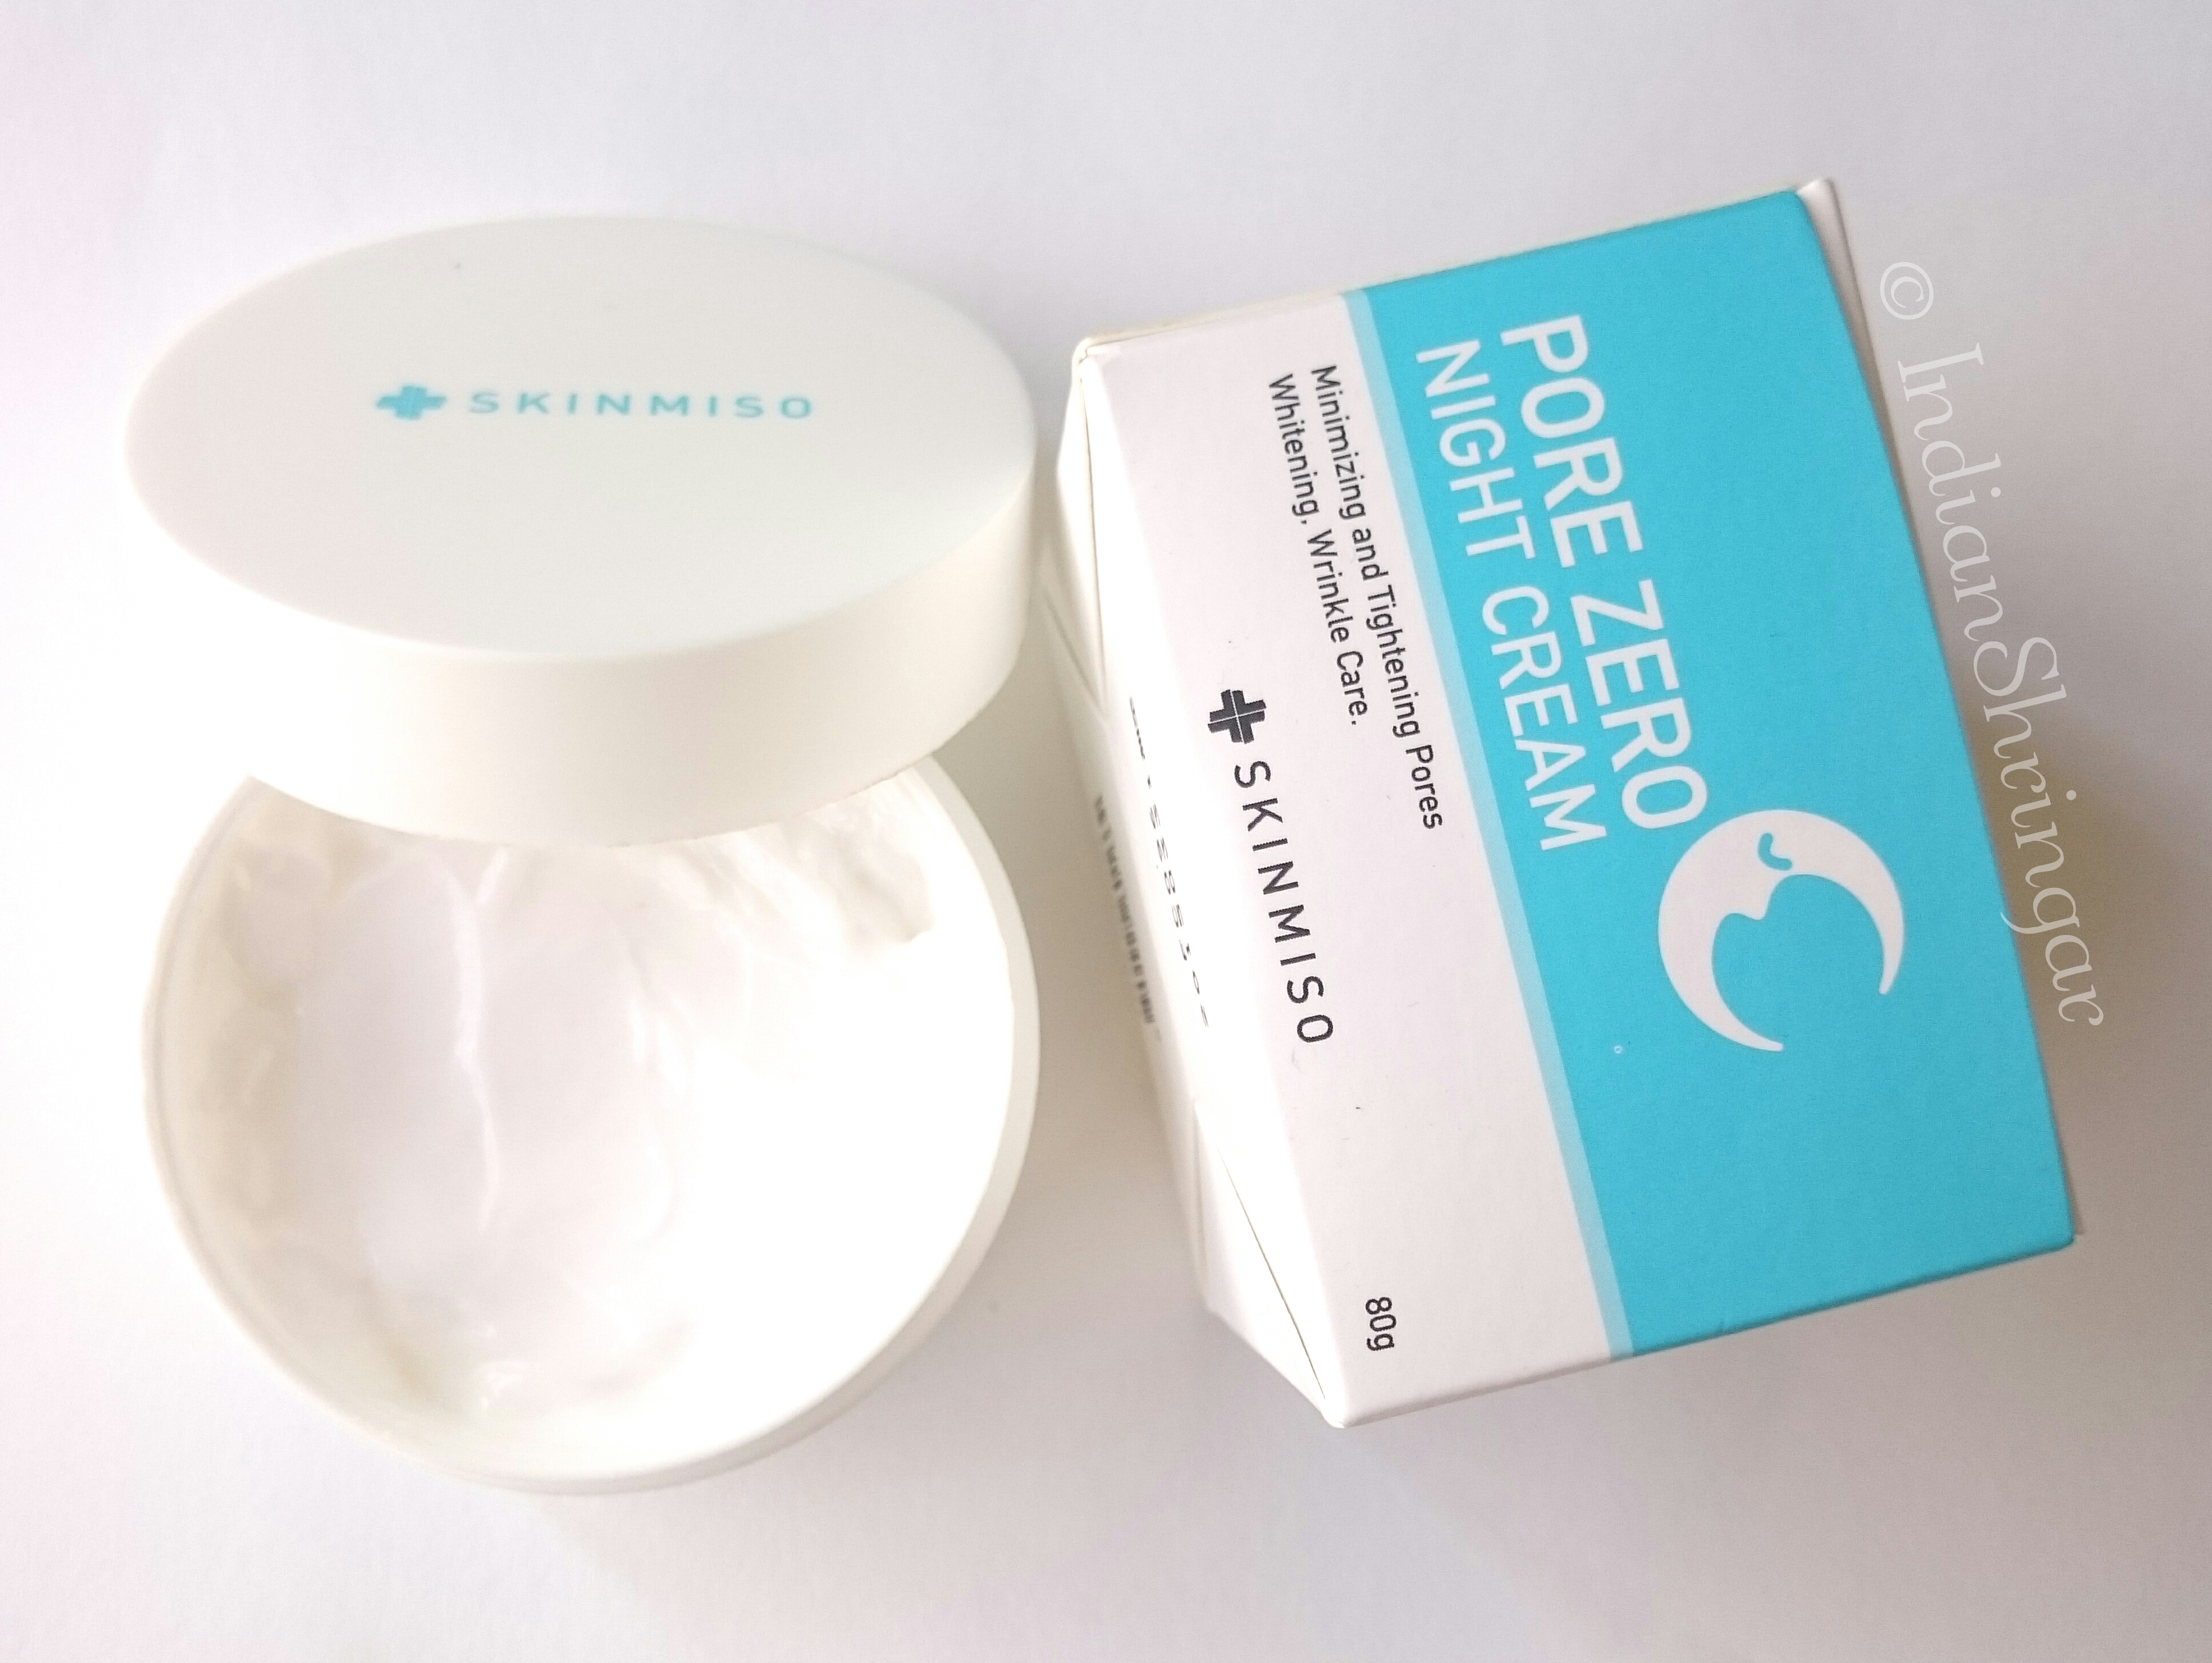 SkinMiso Pore Zero Night Cream review